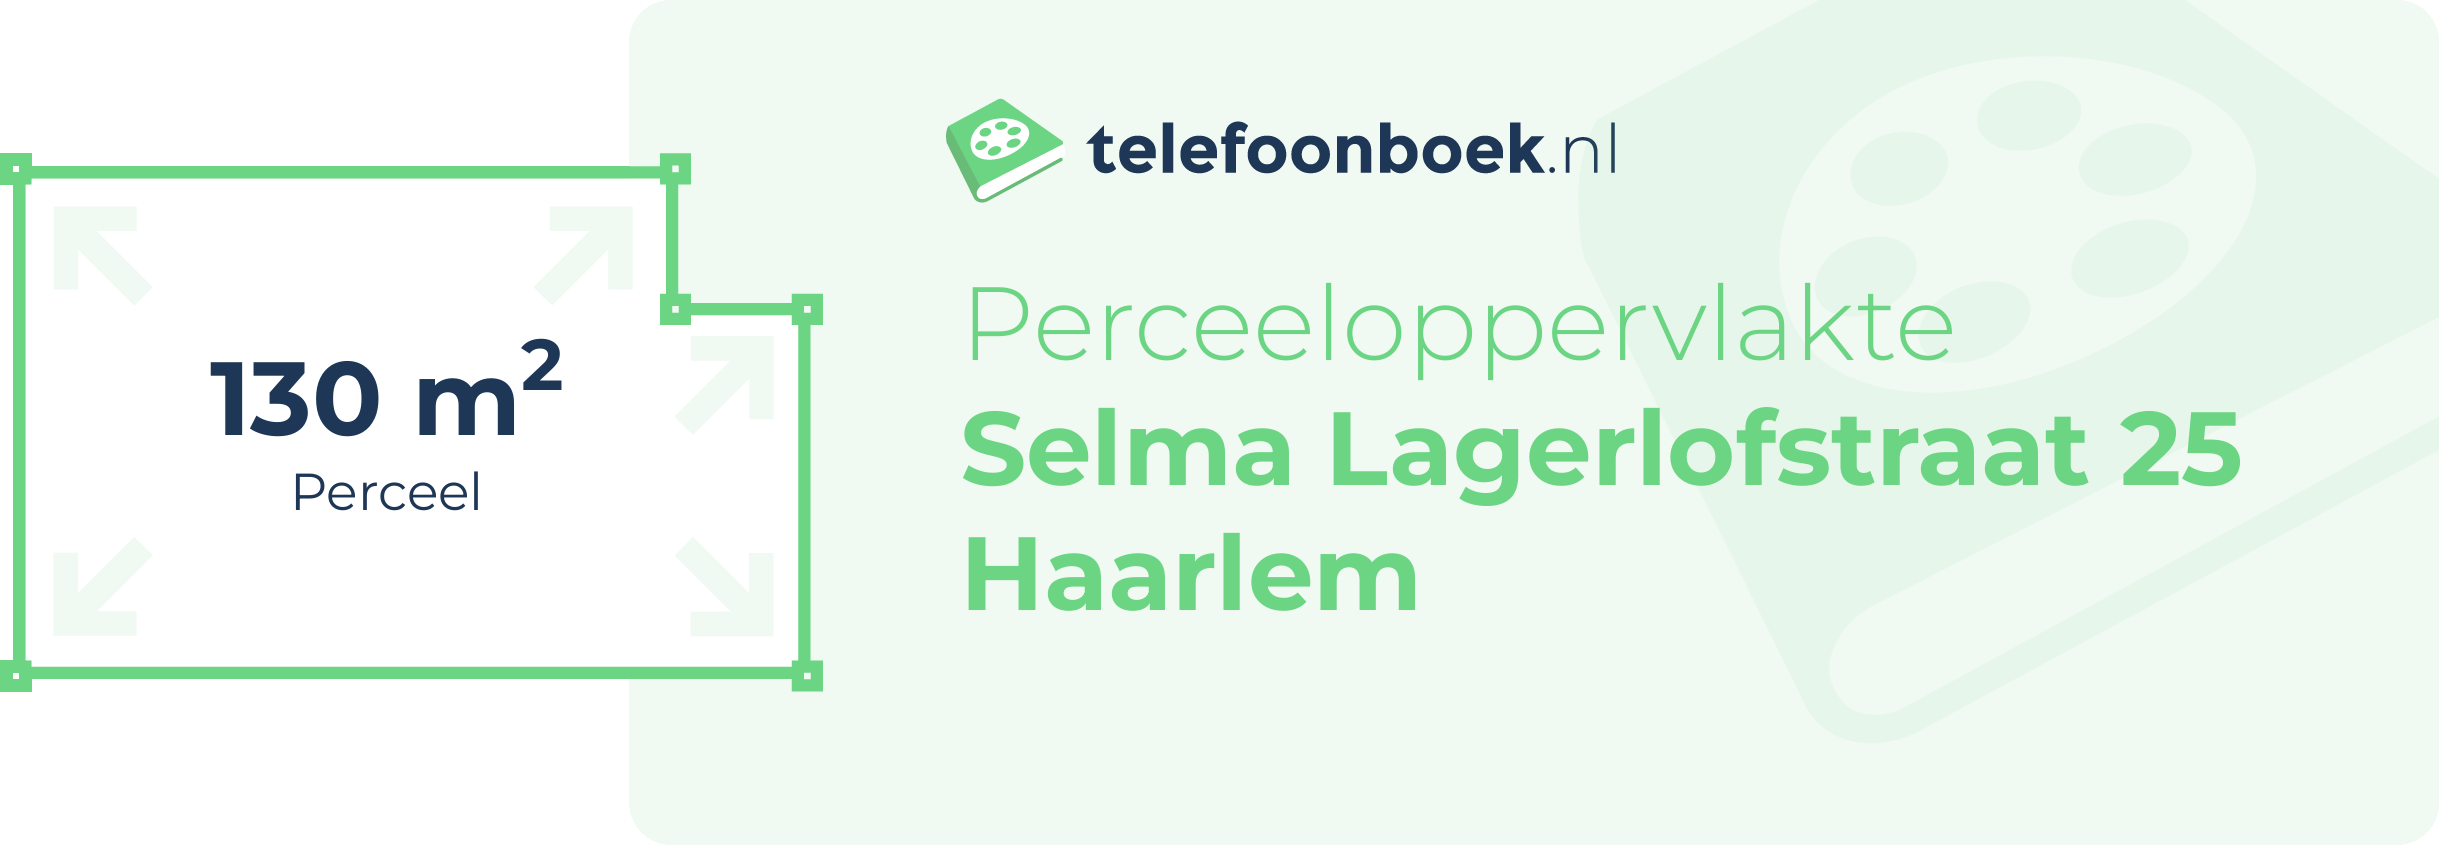 Perceeloppervlakte Selma Lagerlofstraat 25 Haarlem